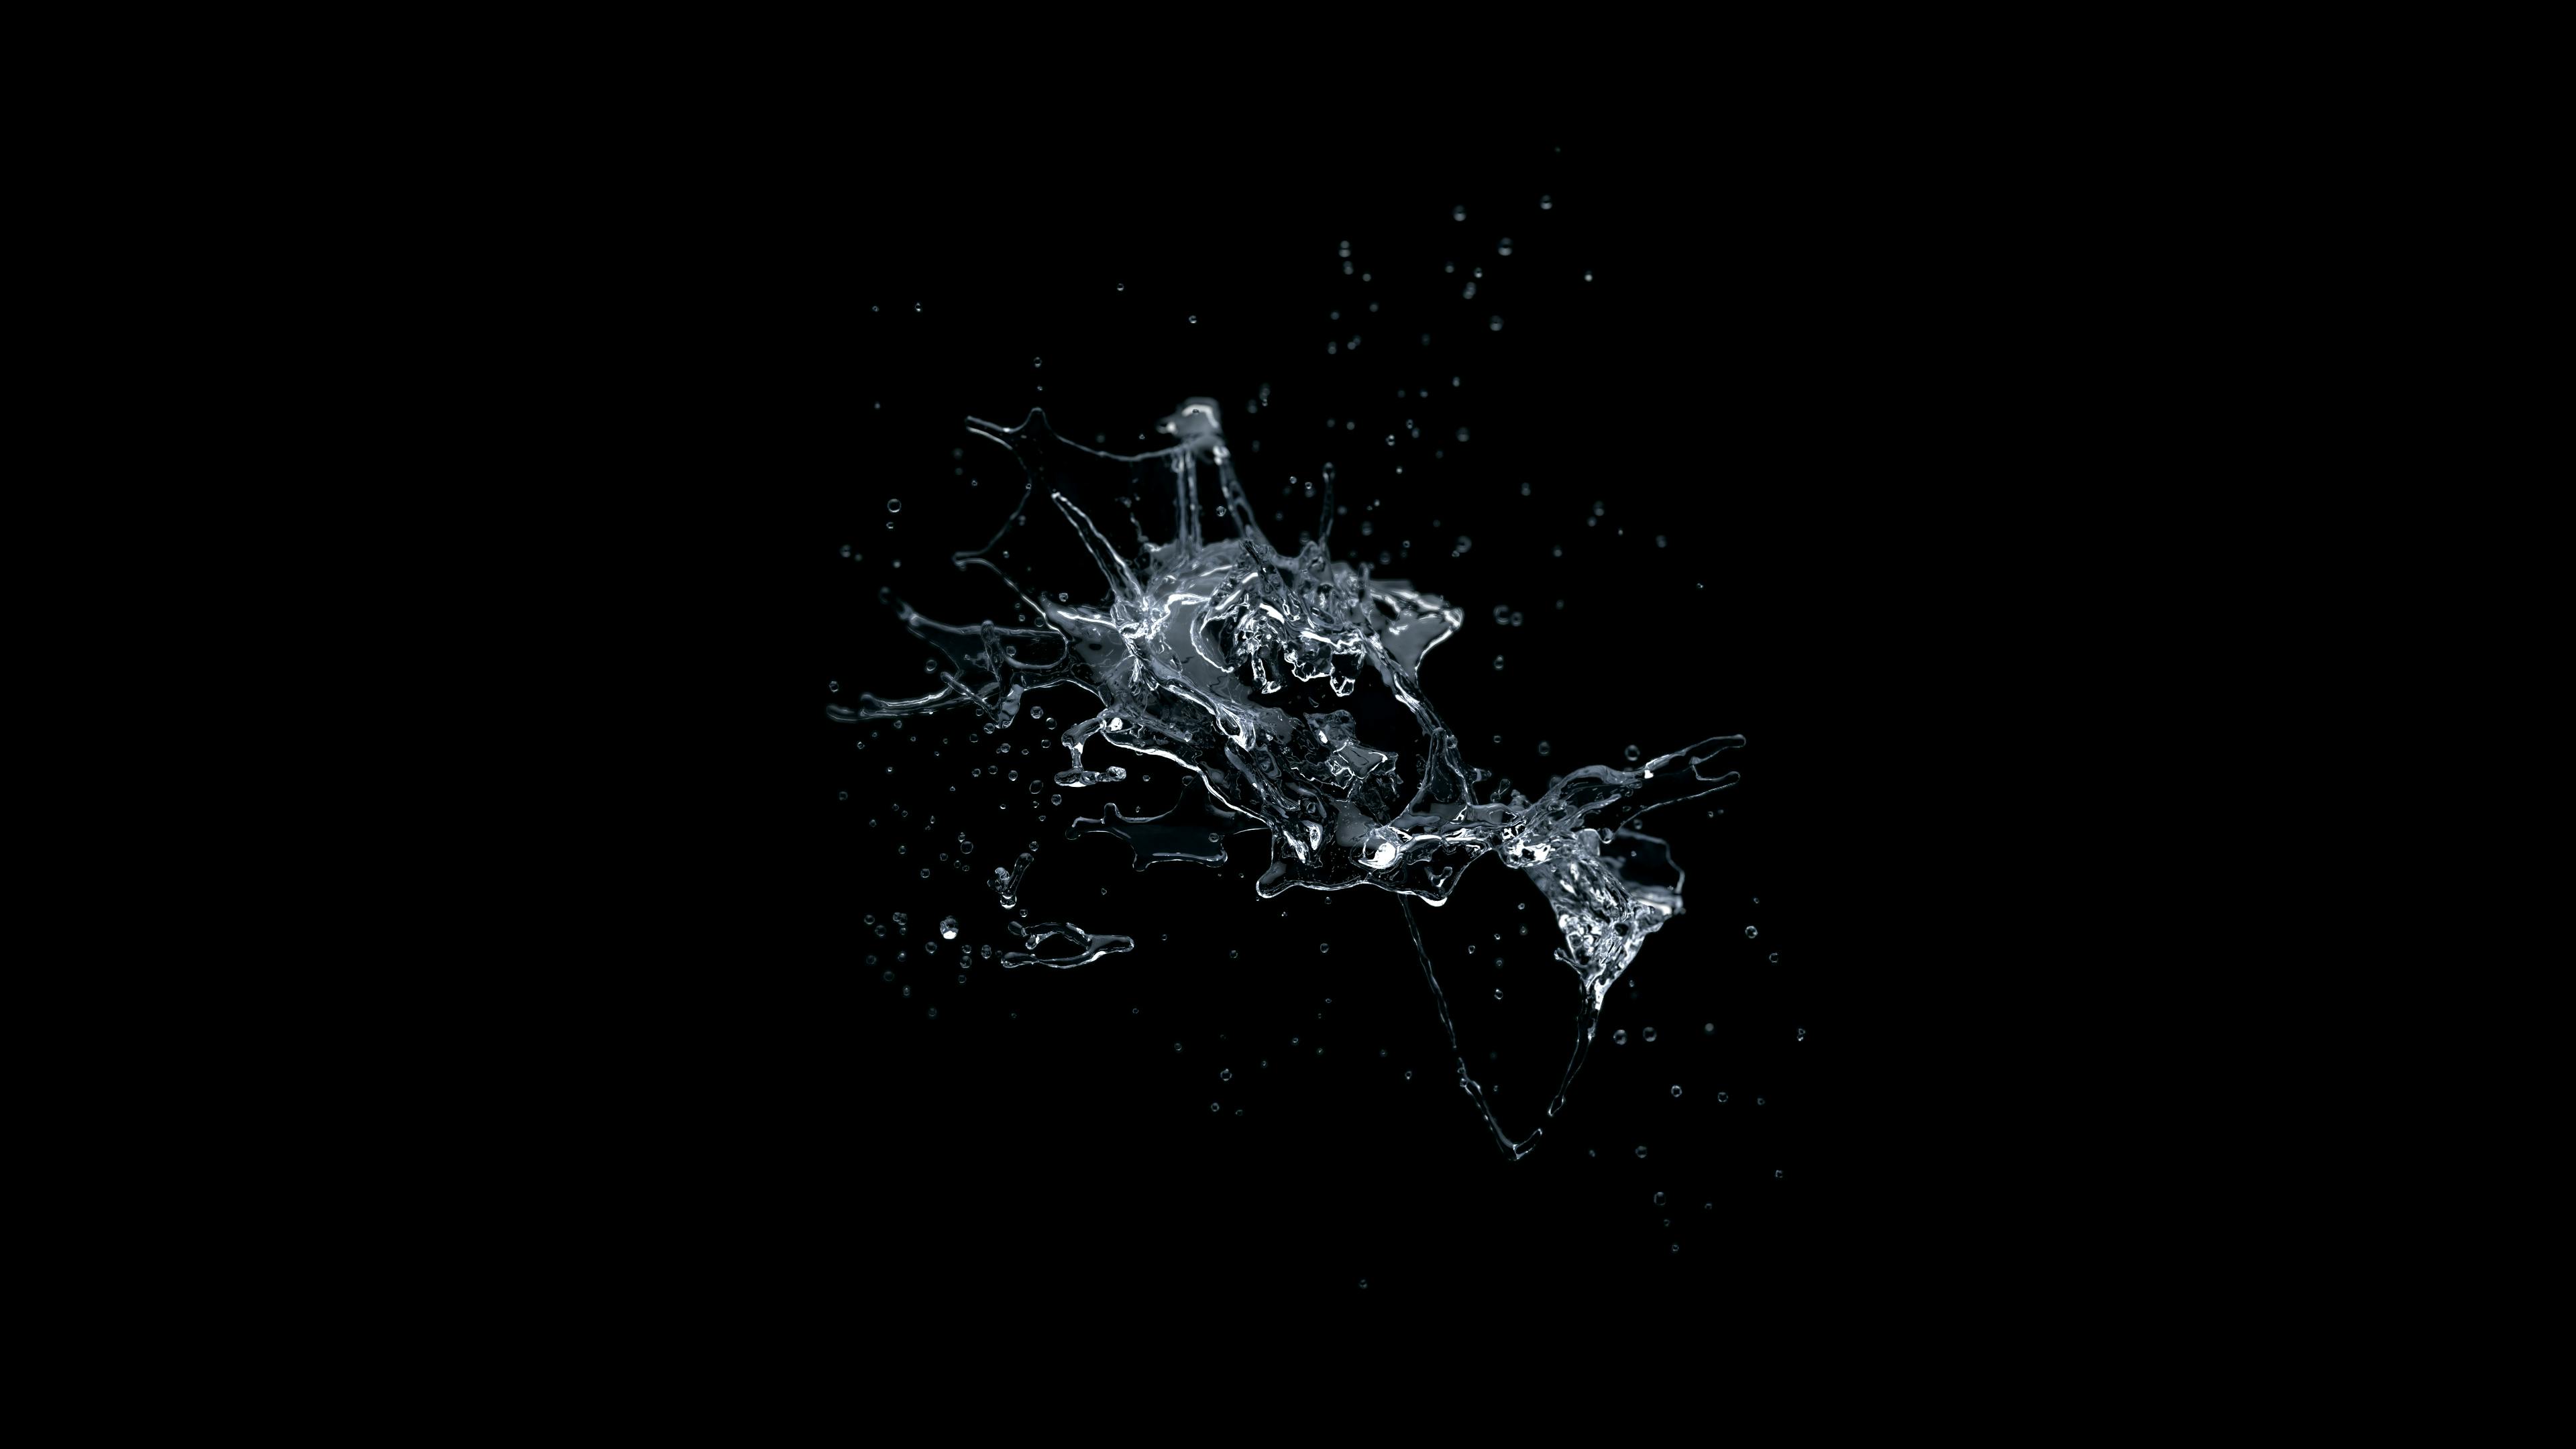 Water Splash on a Black Background · Free Stock Photo